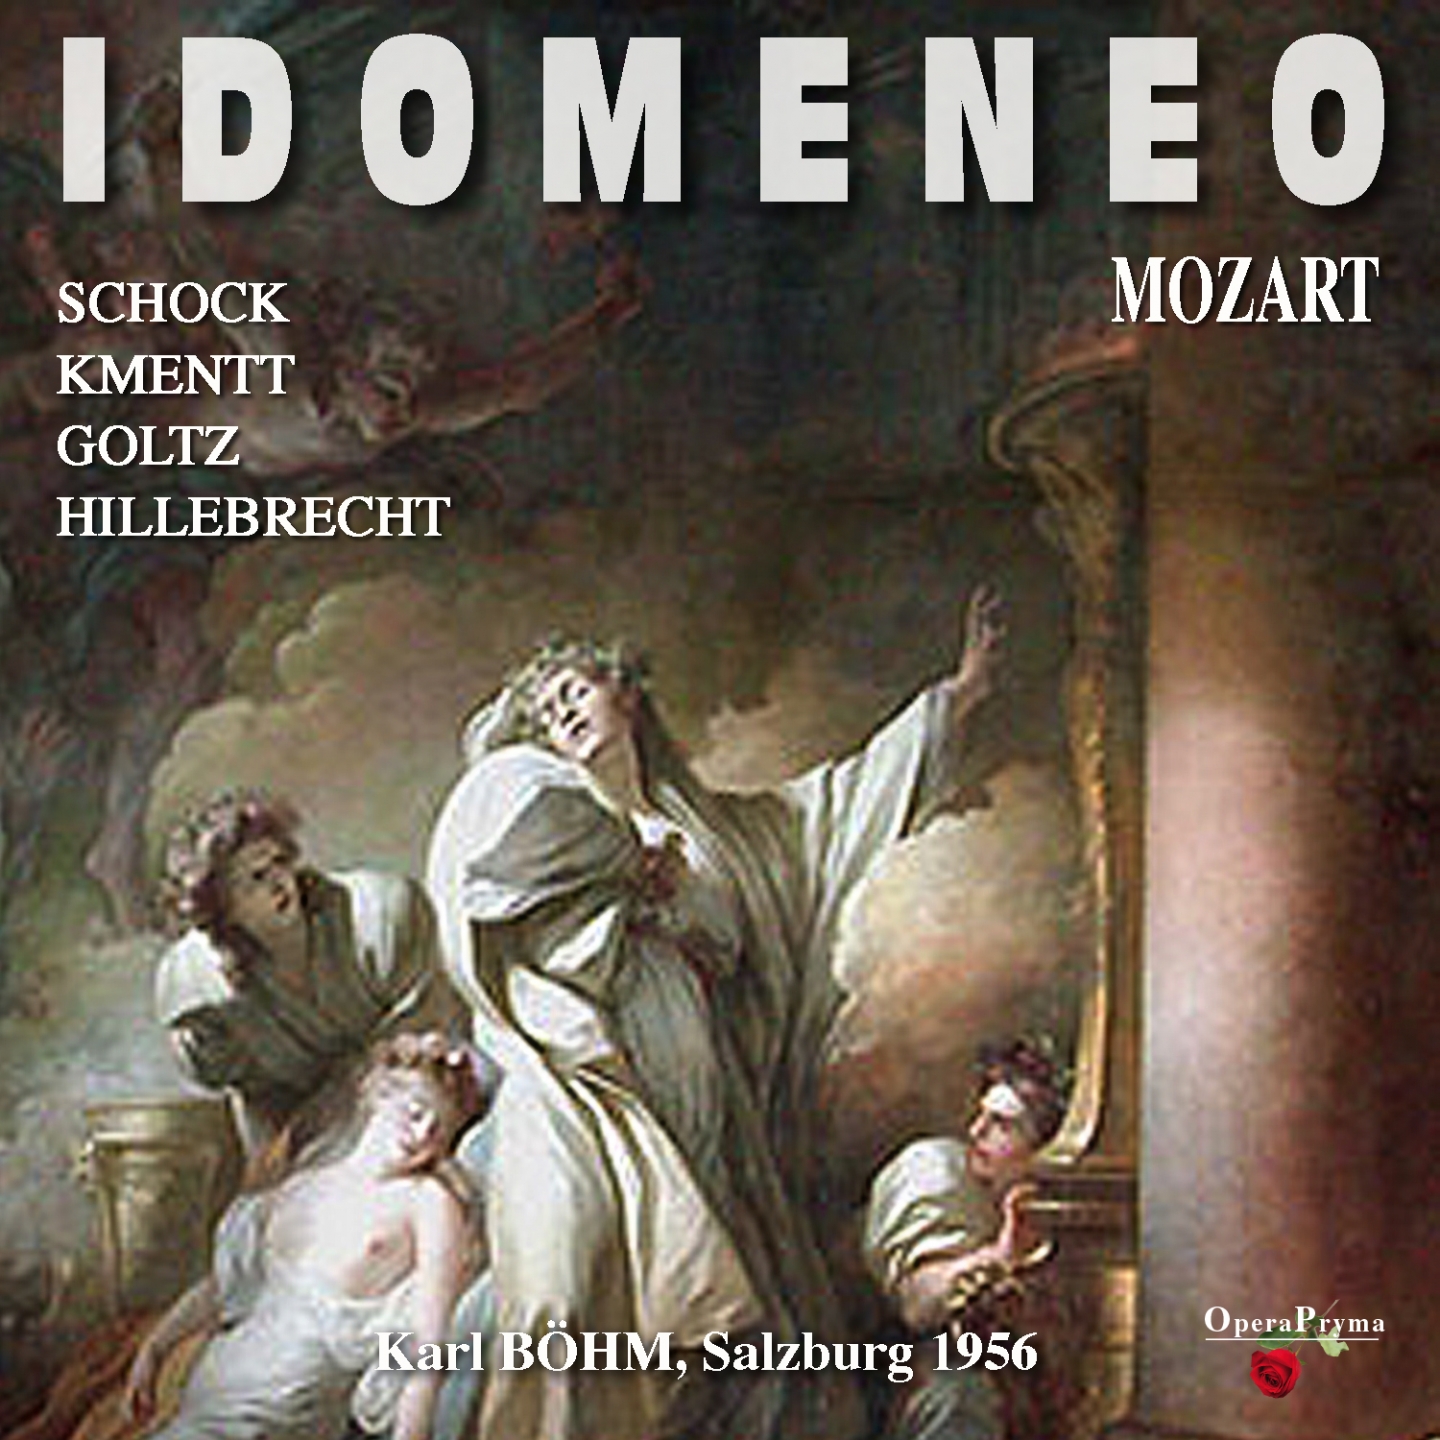 Idomeneo, K. 366, Act I: " Pieta! Numi, pieta!" Coro